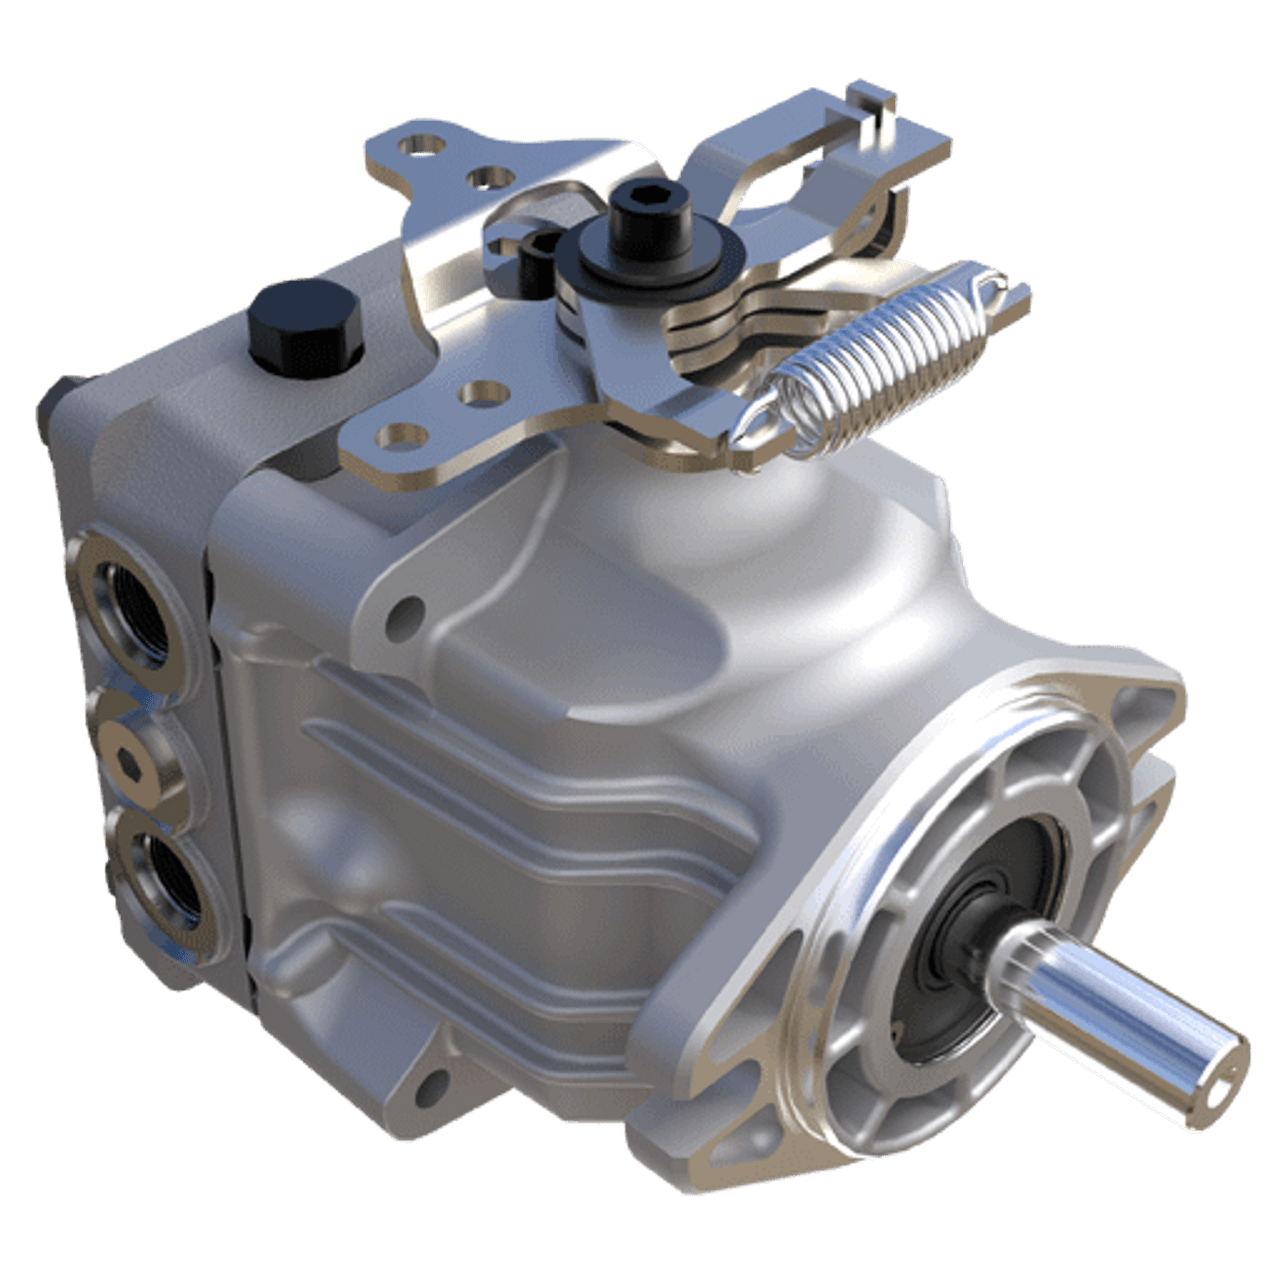 Hydro Gear PG-1GQN-DY1X-XXXX Hydraulic Pump P Series | Original OEM Part | Free Shipping - LawnMowerPartsWorld.com